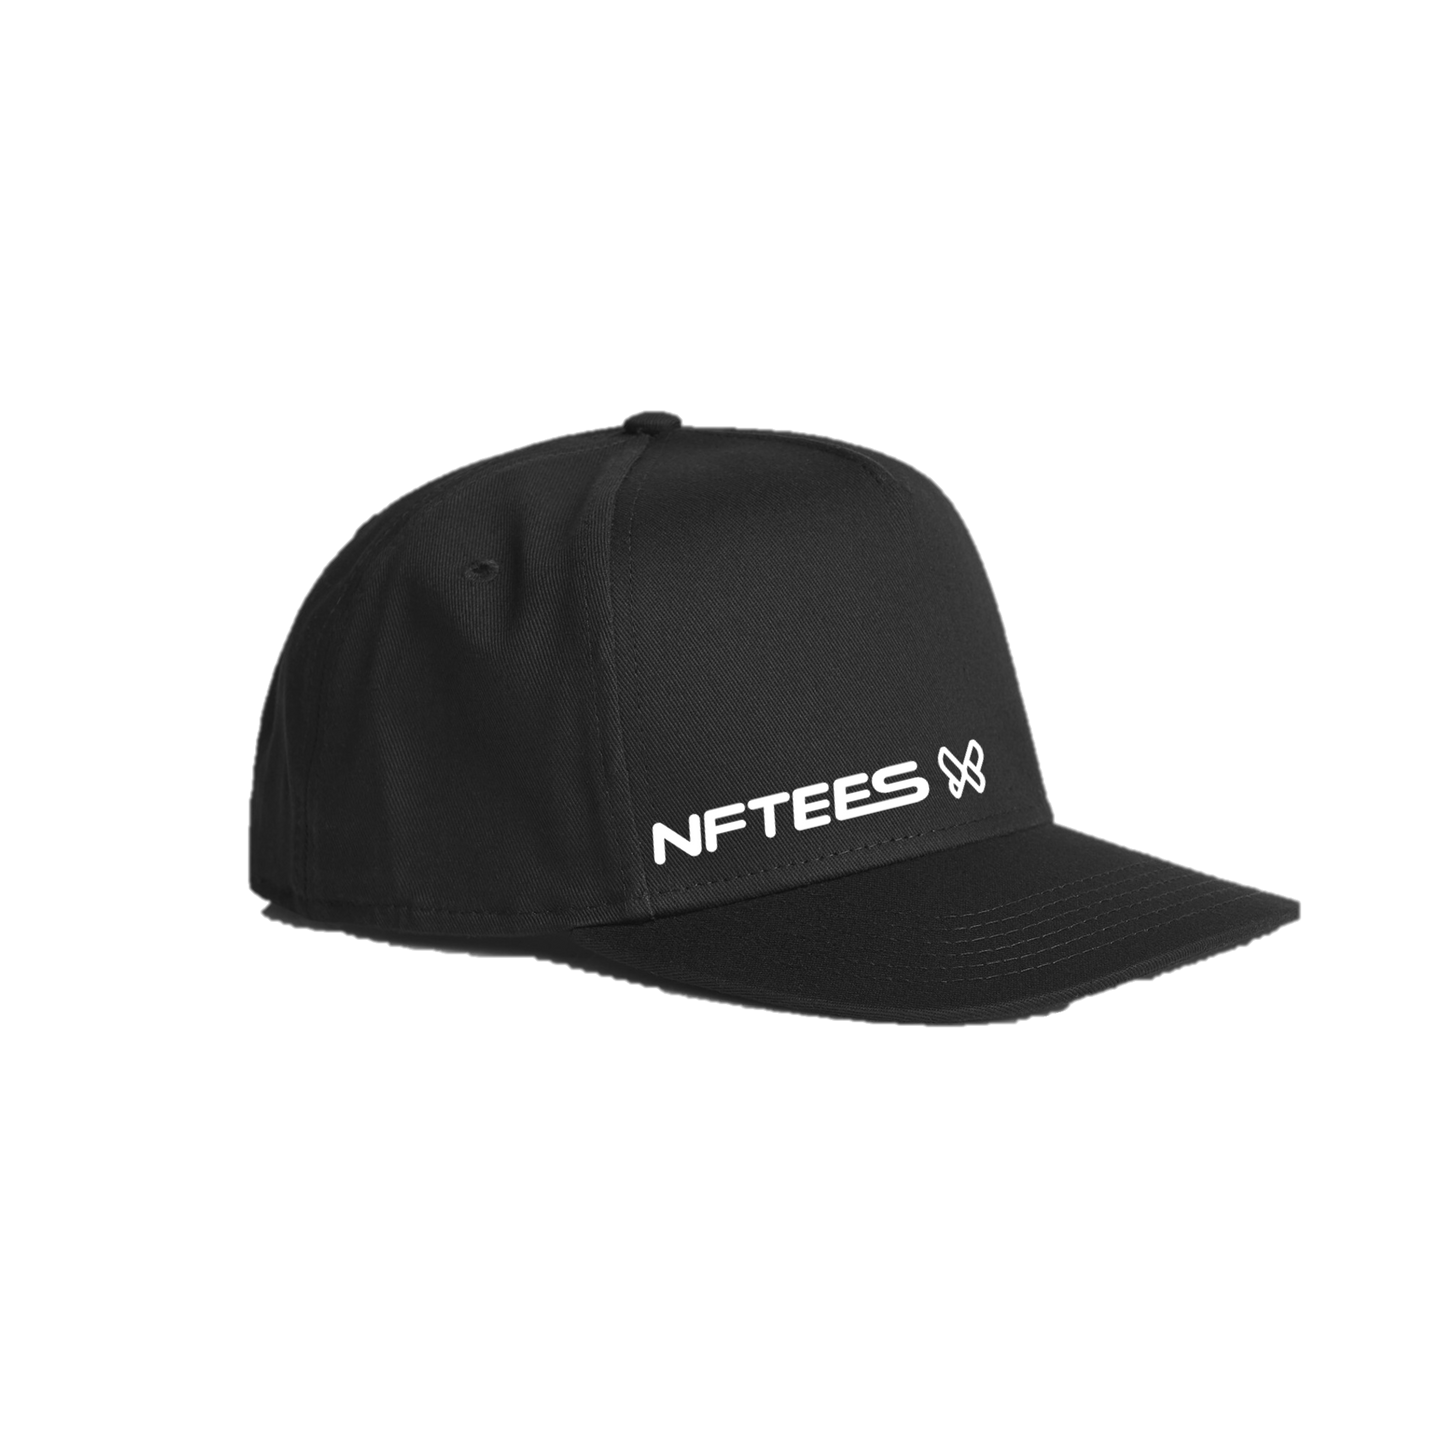 The NFTees Basics Cap